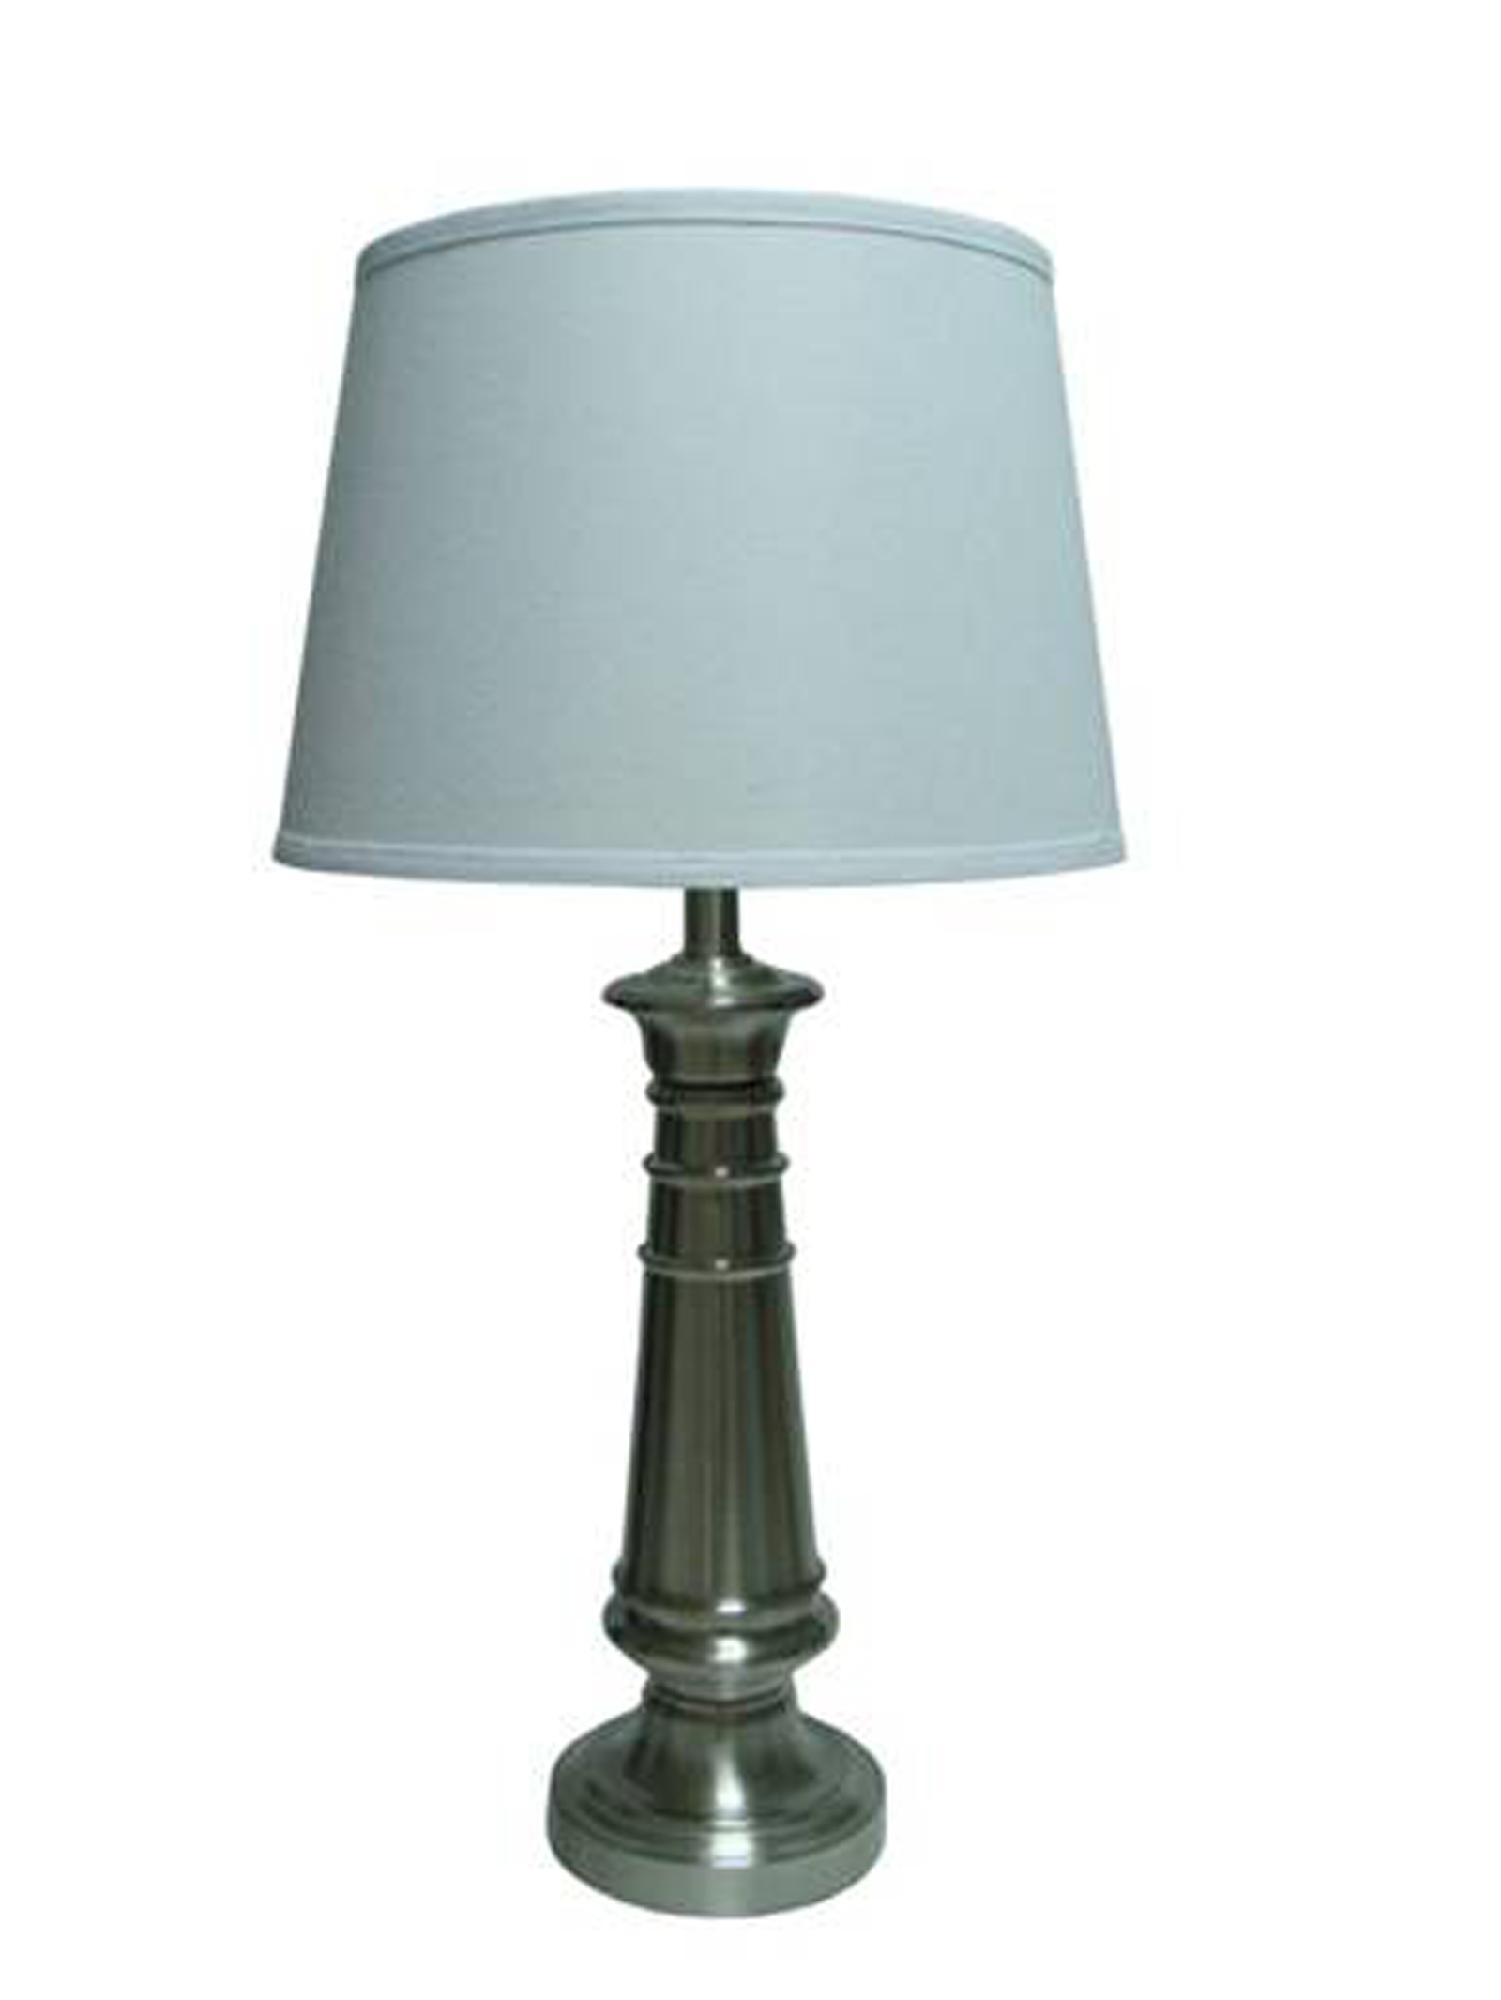 27.5" tall metal table lamp.